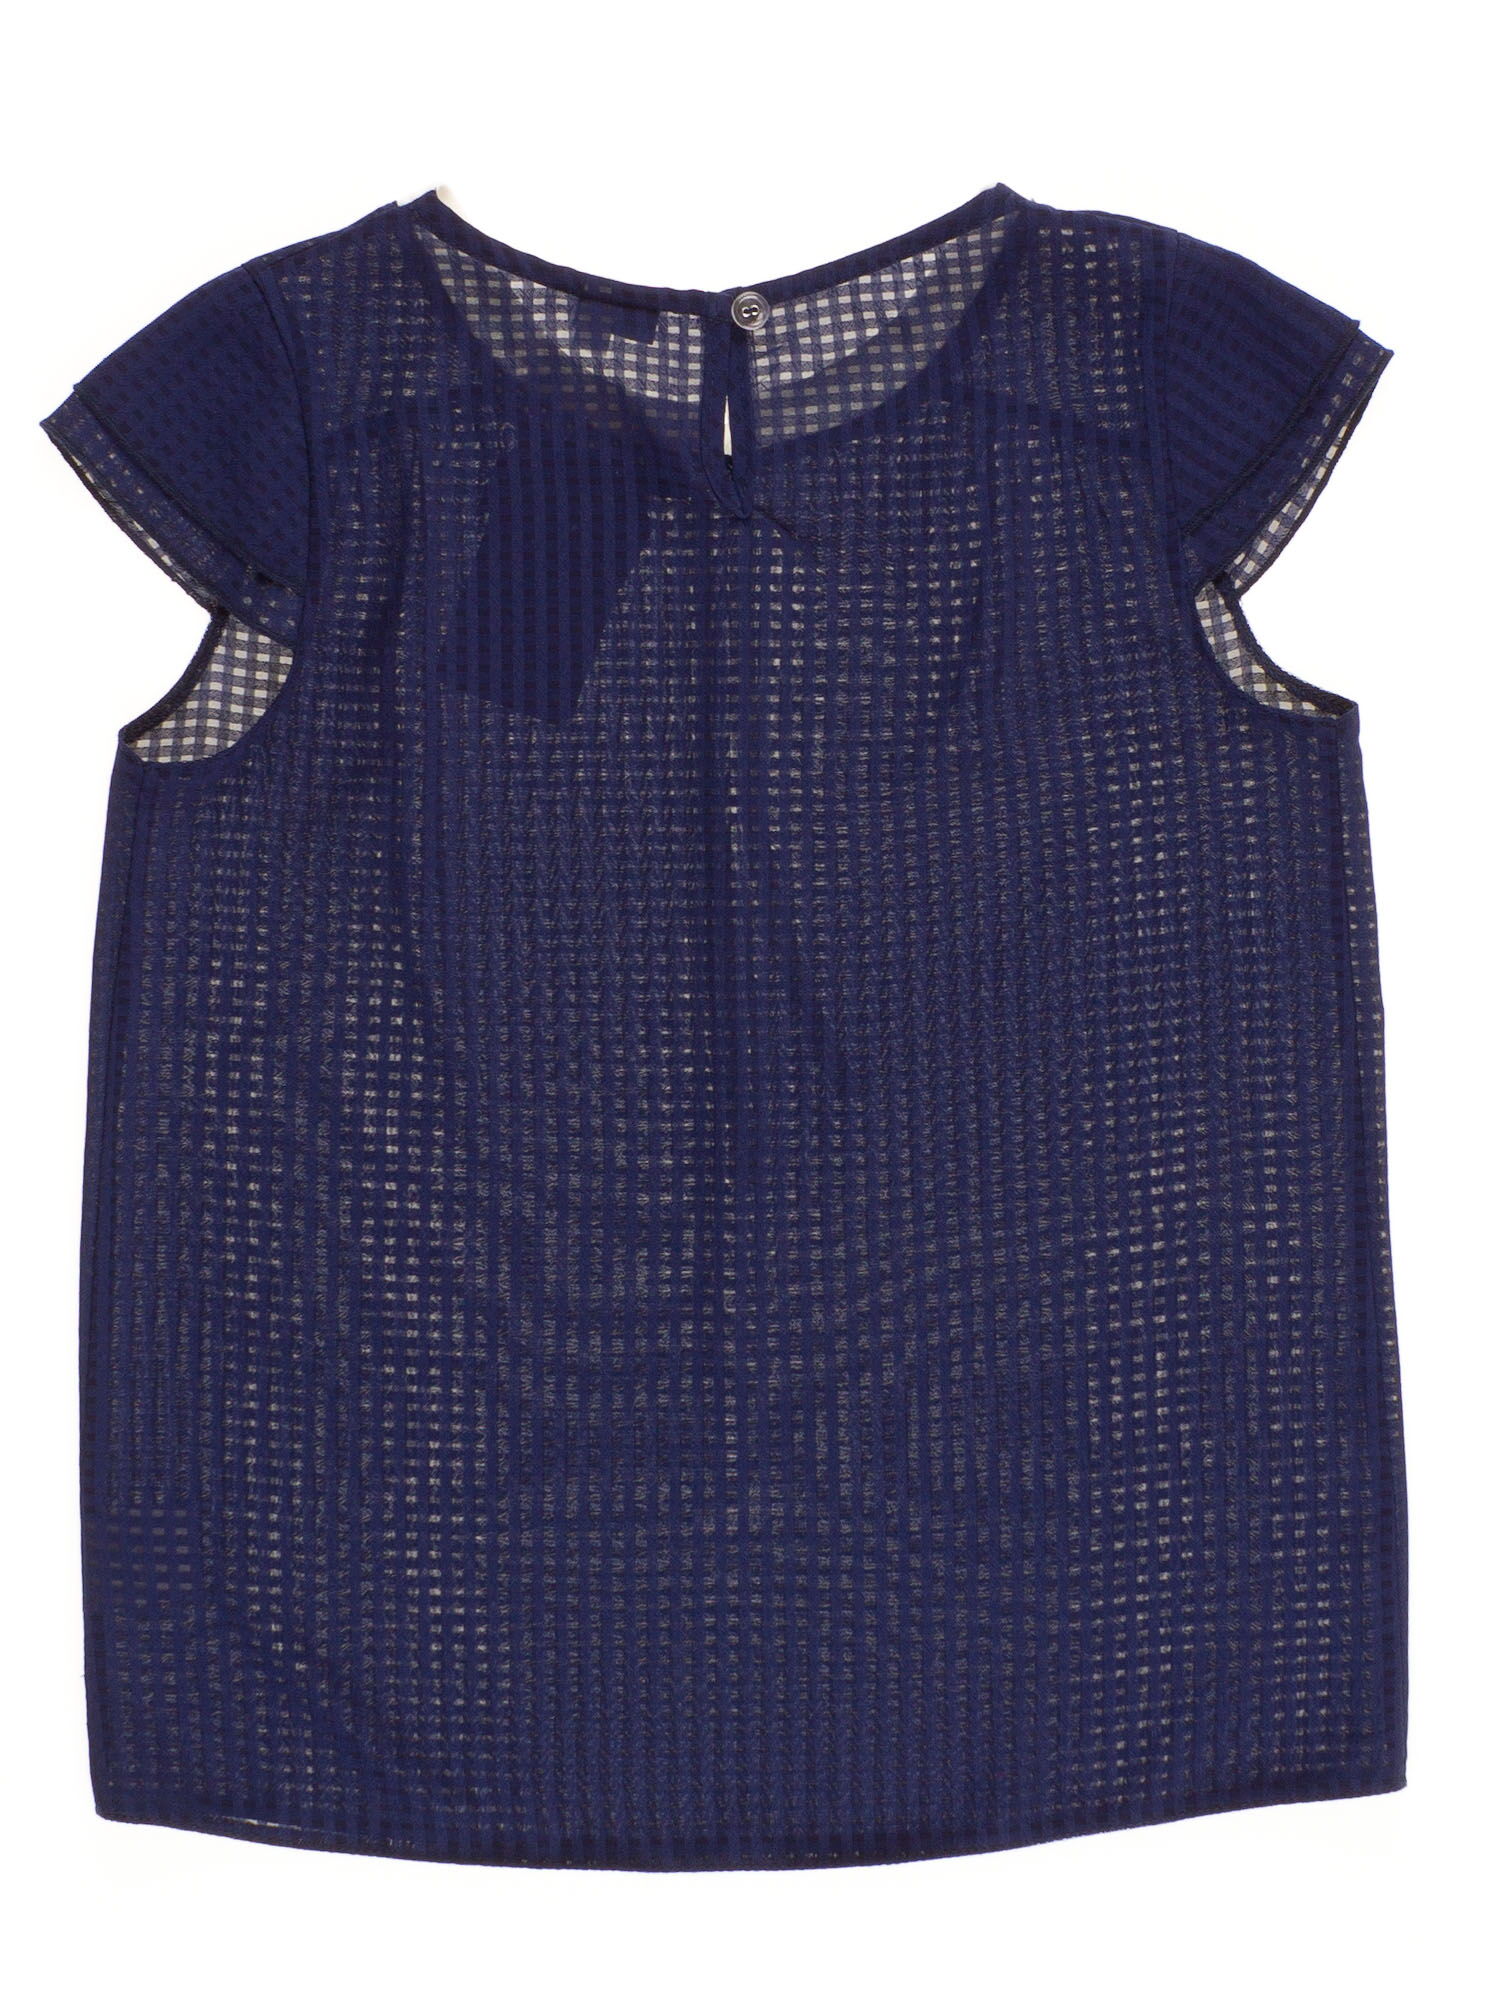 Блузка с коротким рукавом для девочки MEVIS синяя 2067 - фото